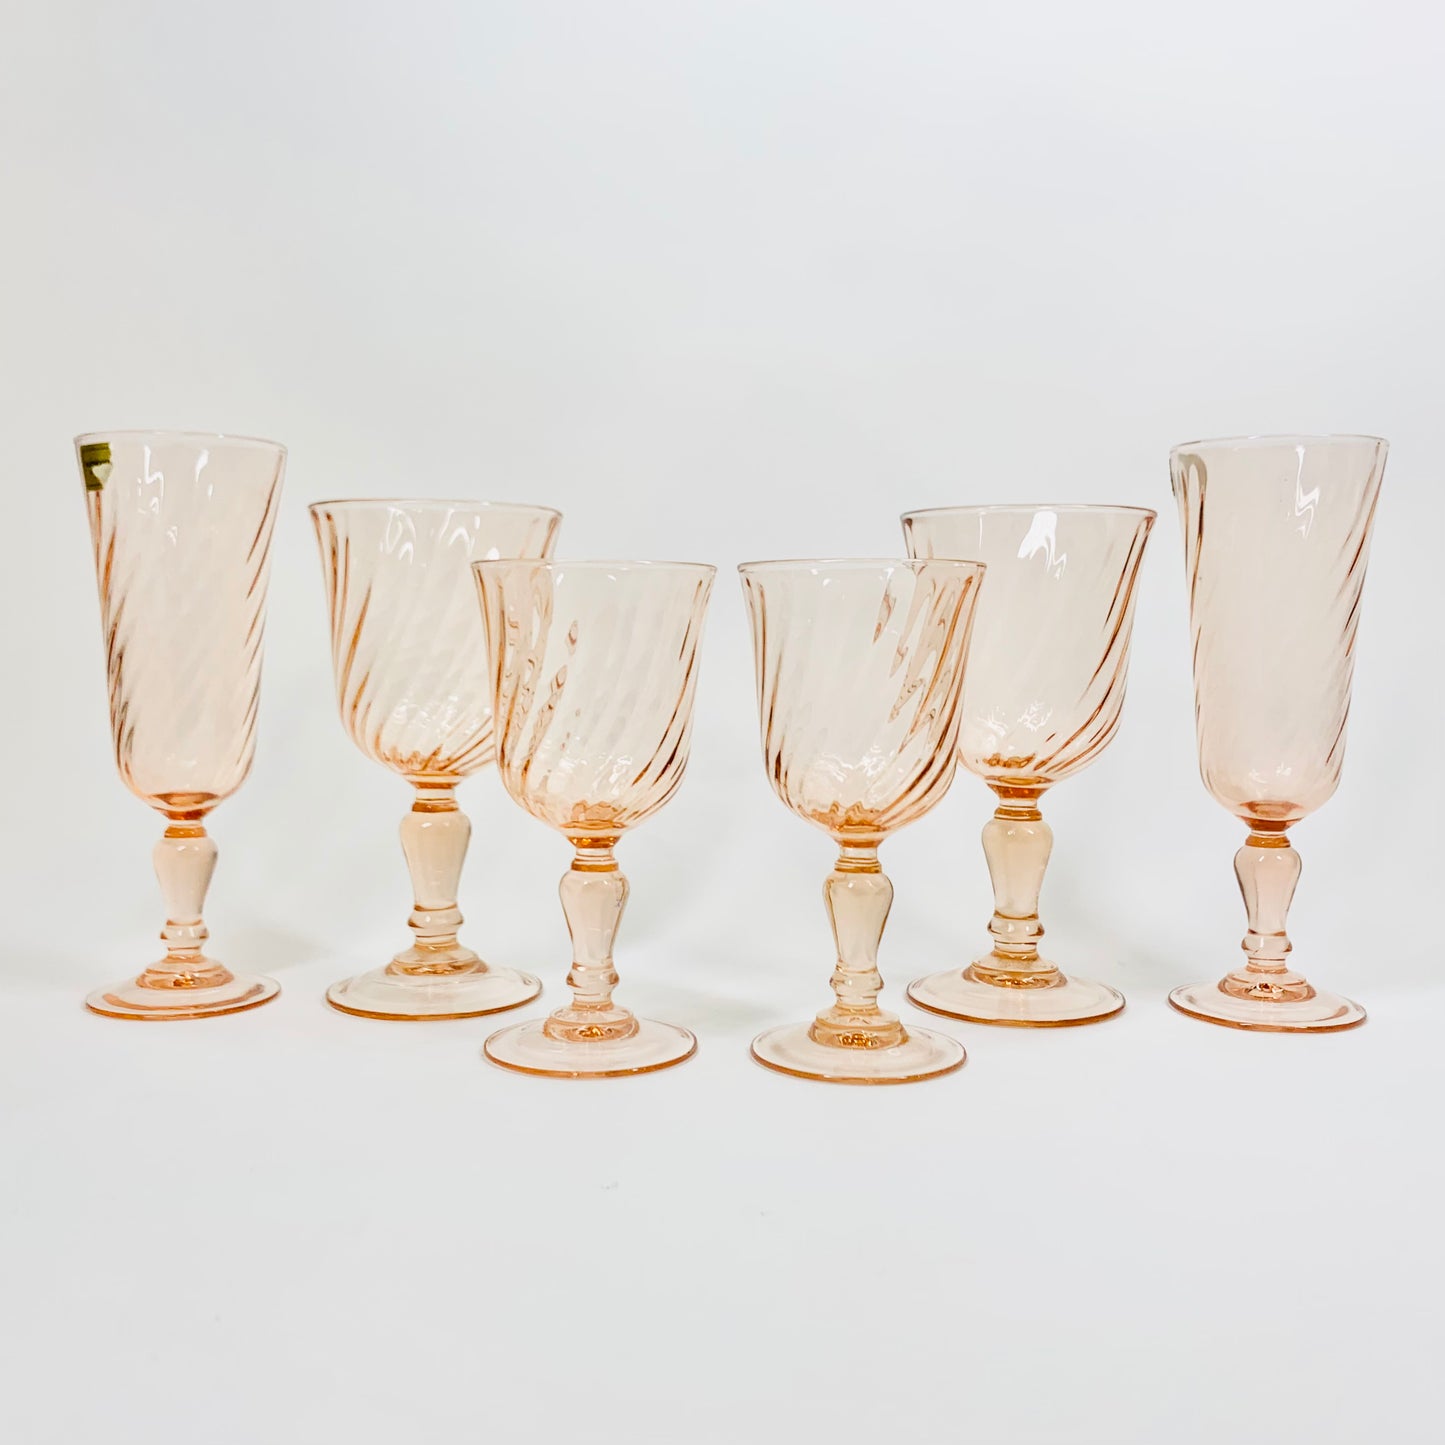 Extremely rare Midcentury French Luminarc rosaline glasses